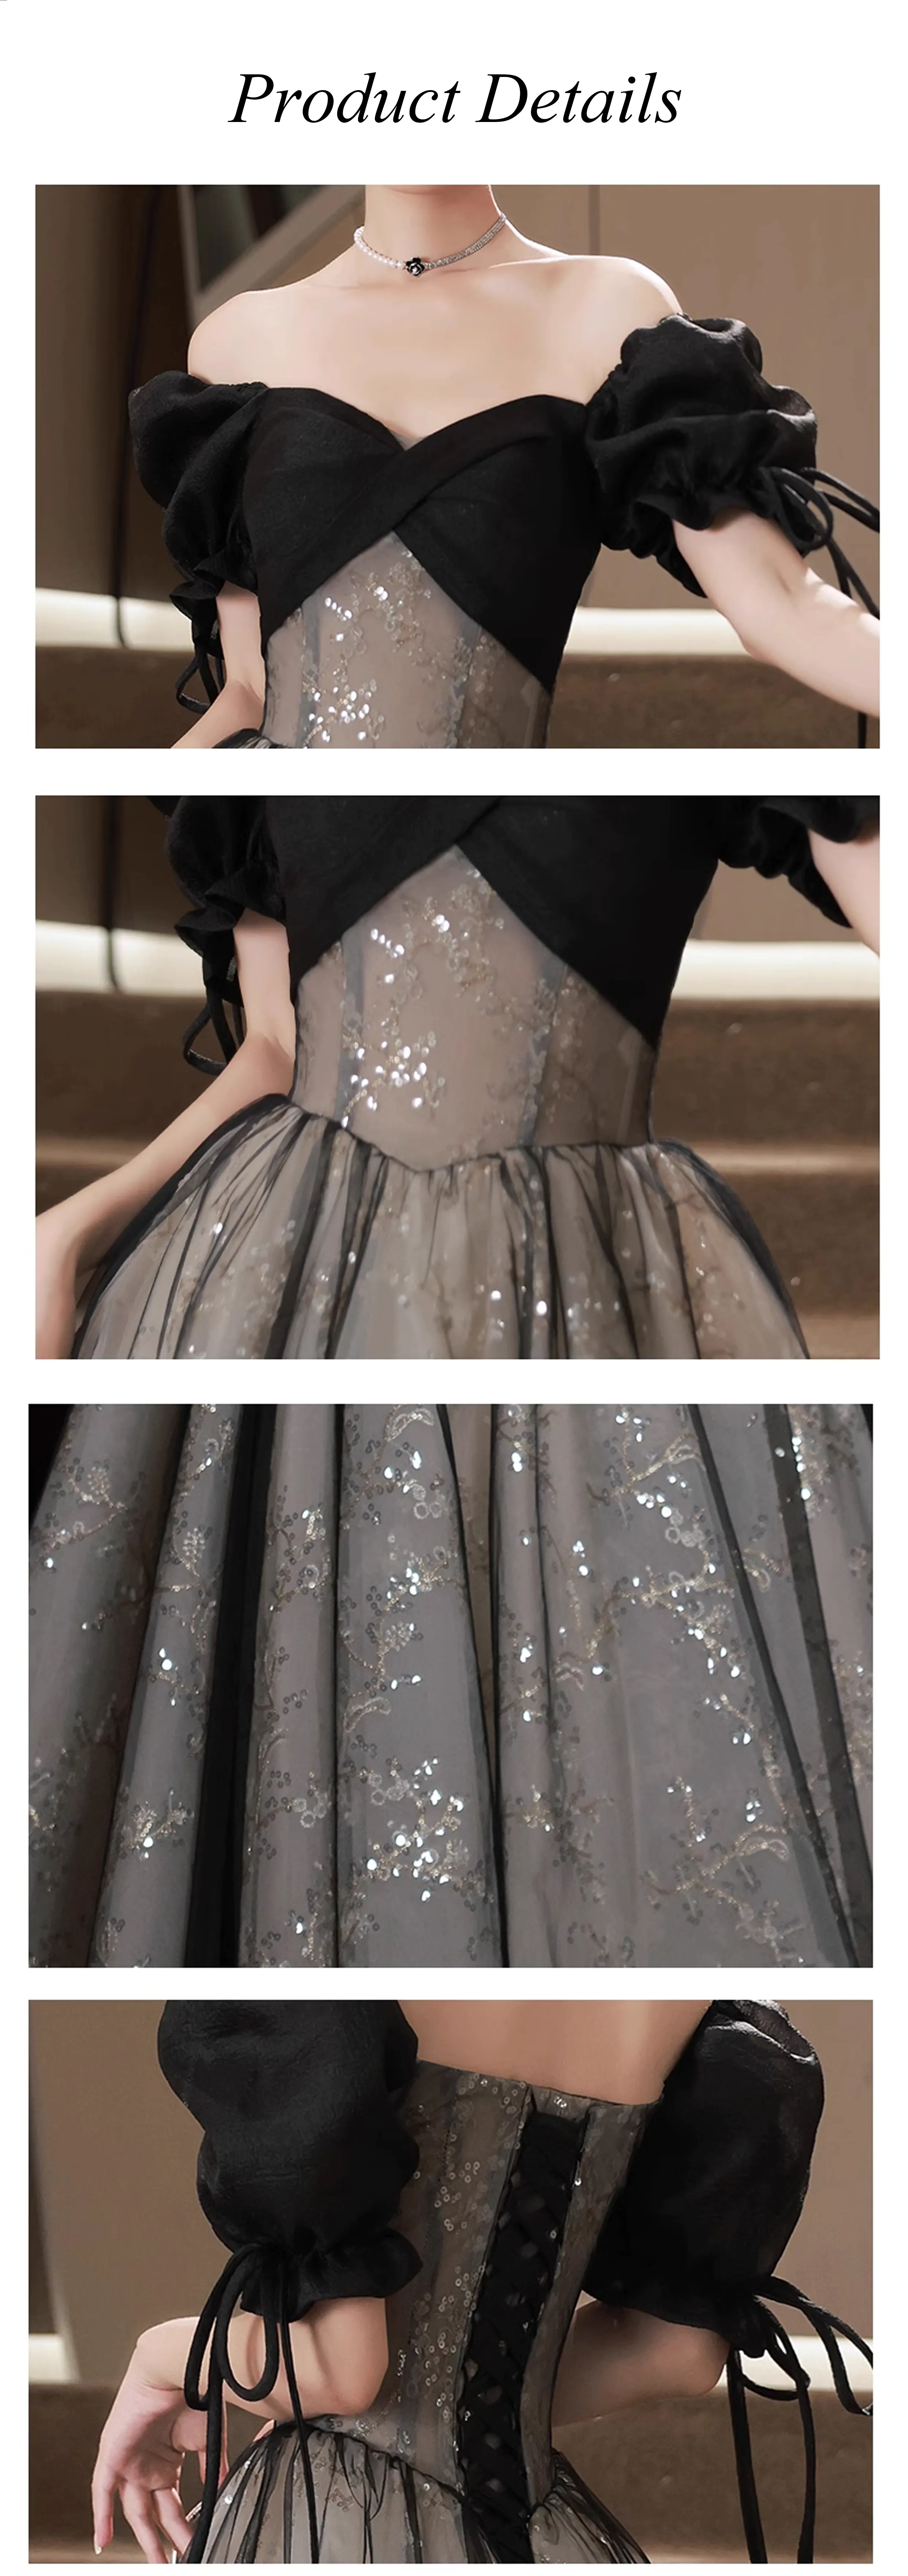 Fashion-Black-Off-the-Shoulder-Audrey-Hepburn-Style-Cocktail-Party-Dress13